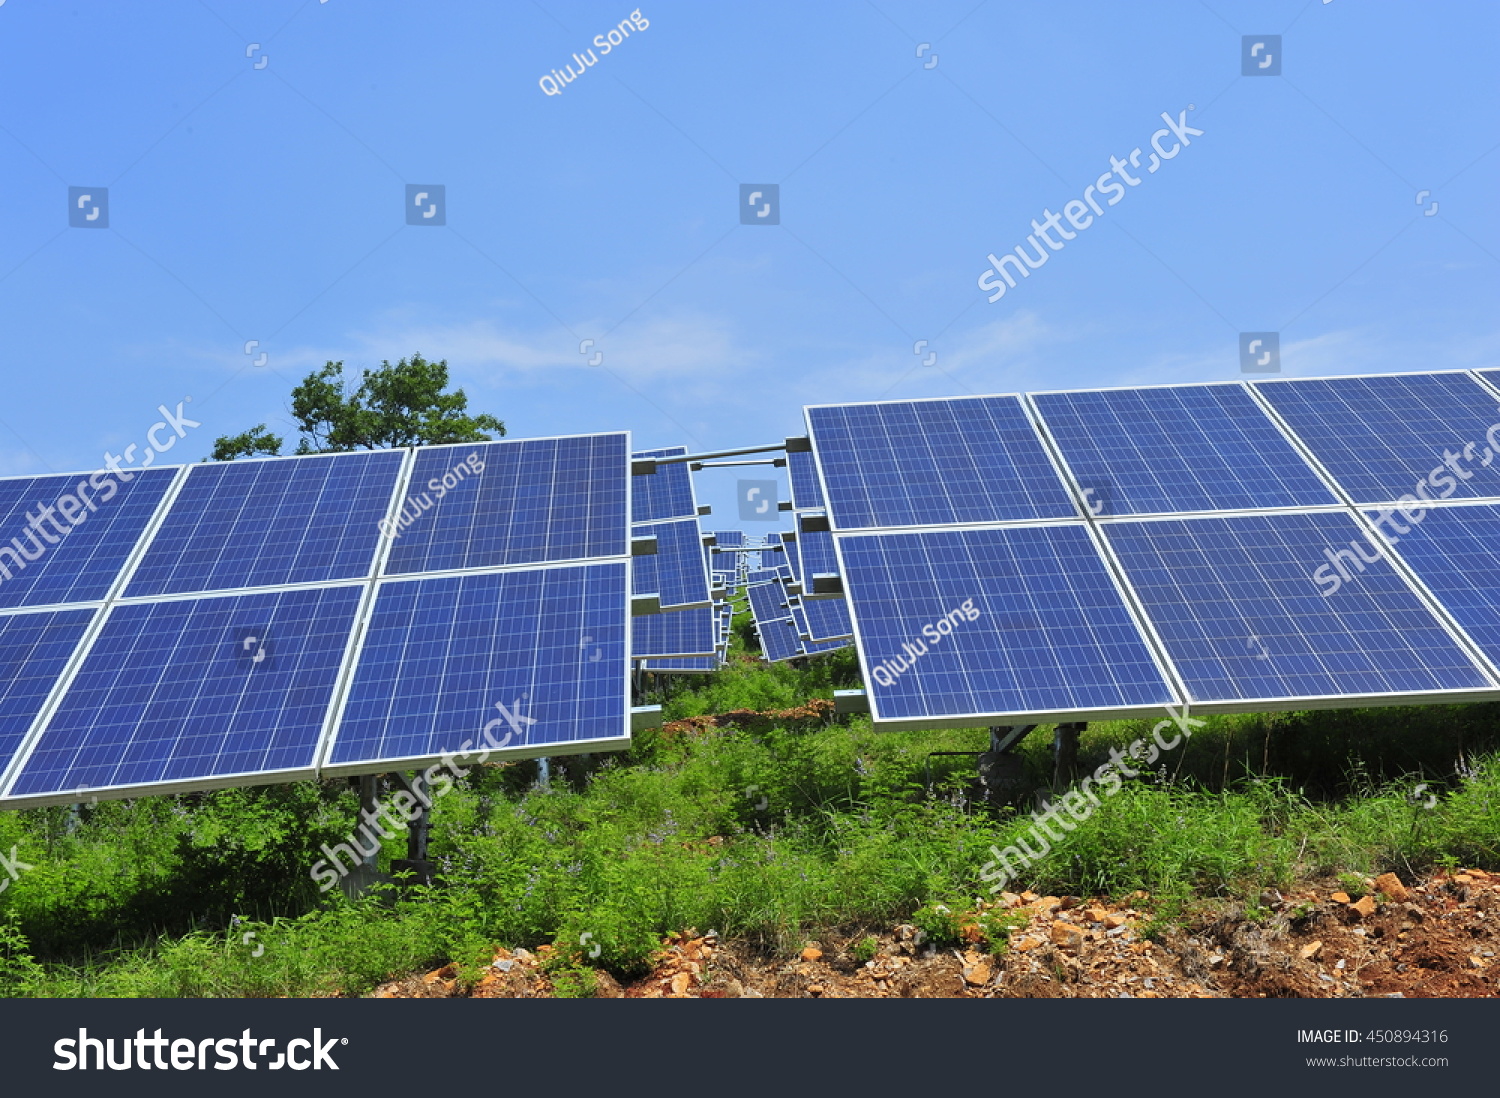 Solar Power Equipment Stock Photo 450894316 : Shutterstock